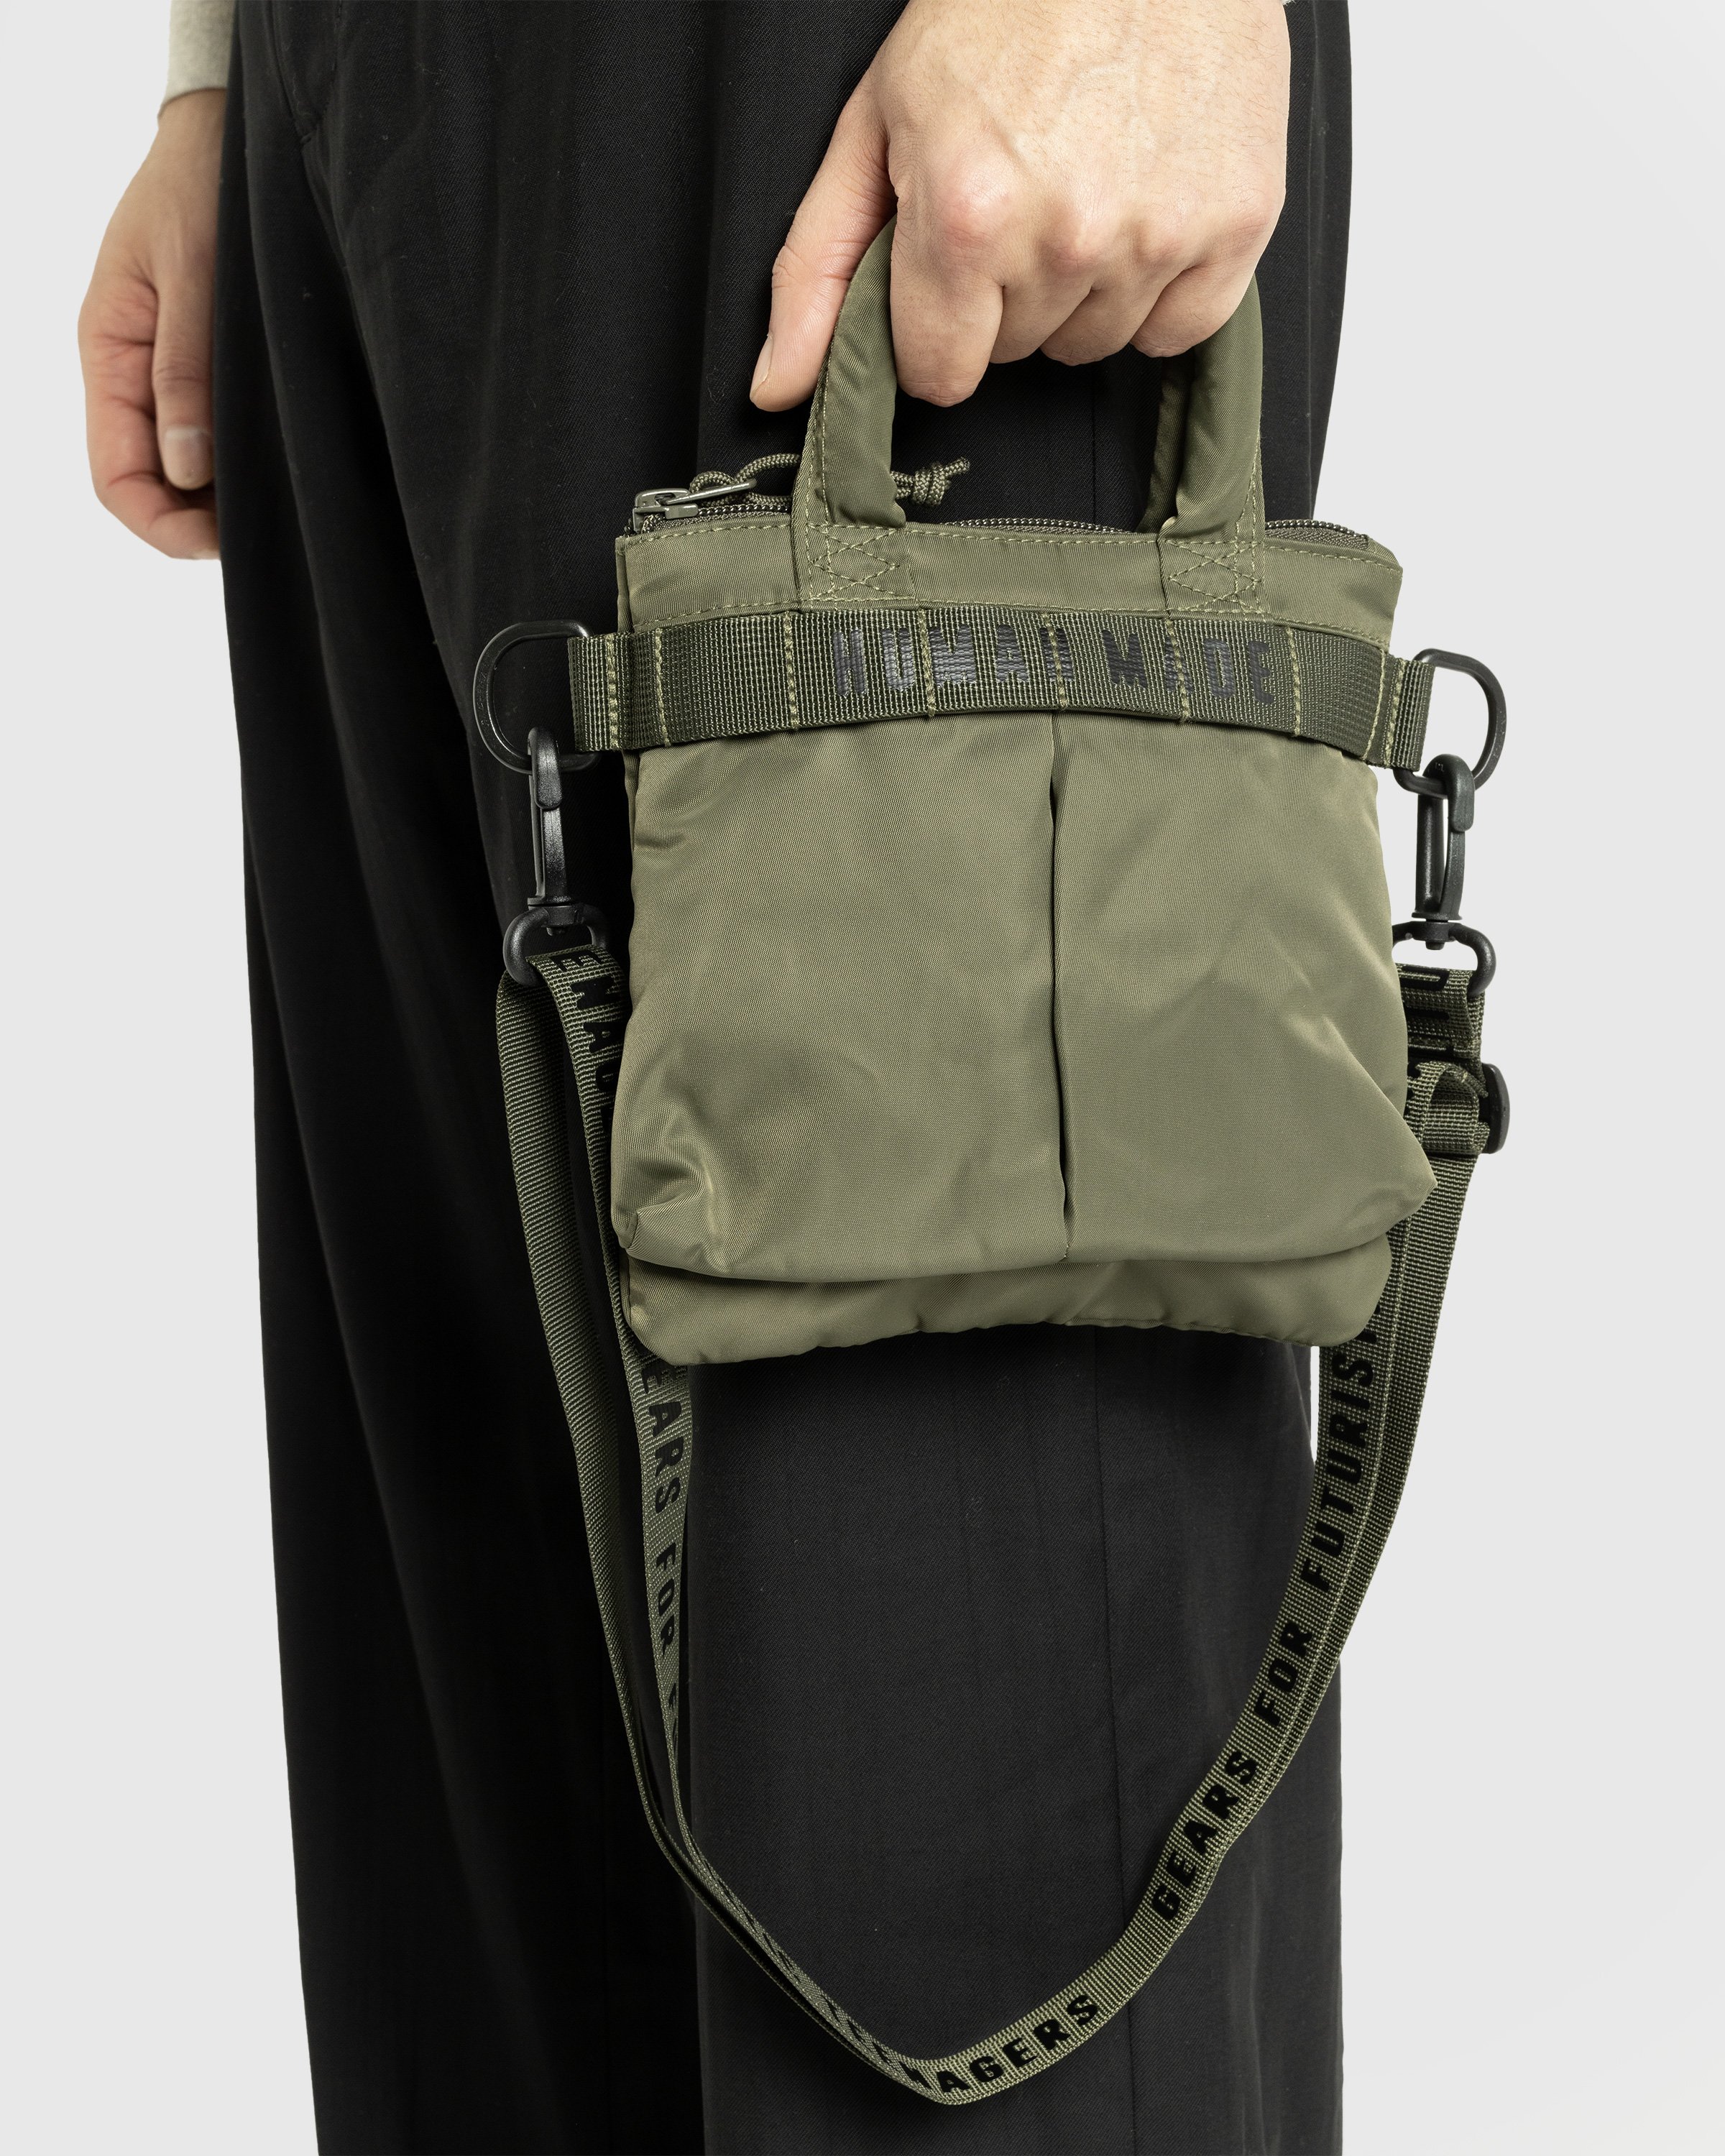 Human Made - MINI HELMET BAG Olive Drab - Accessories - Green - Image 3